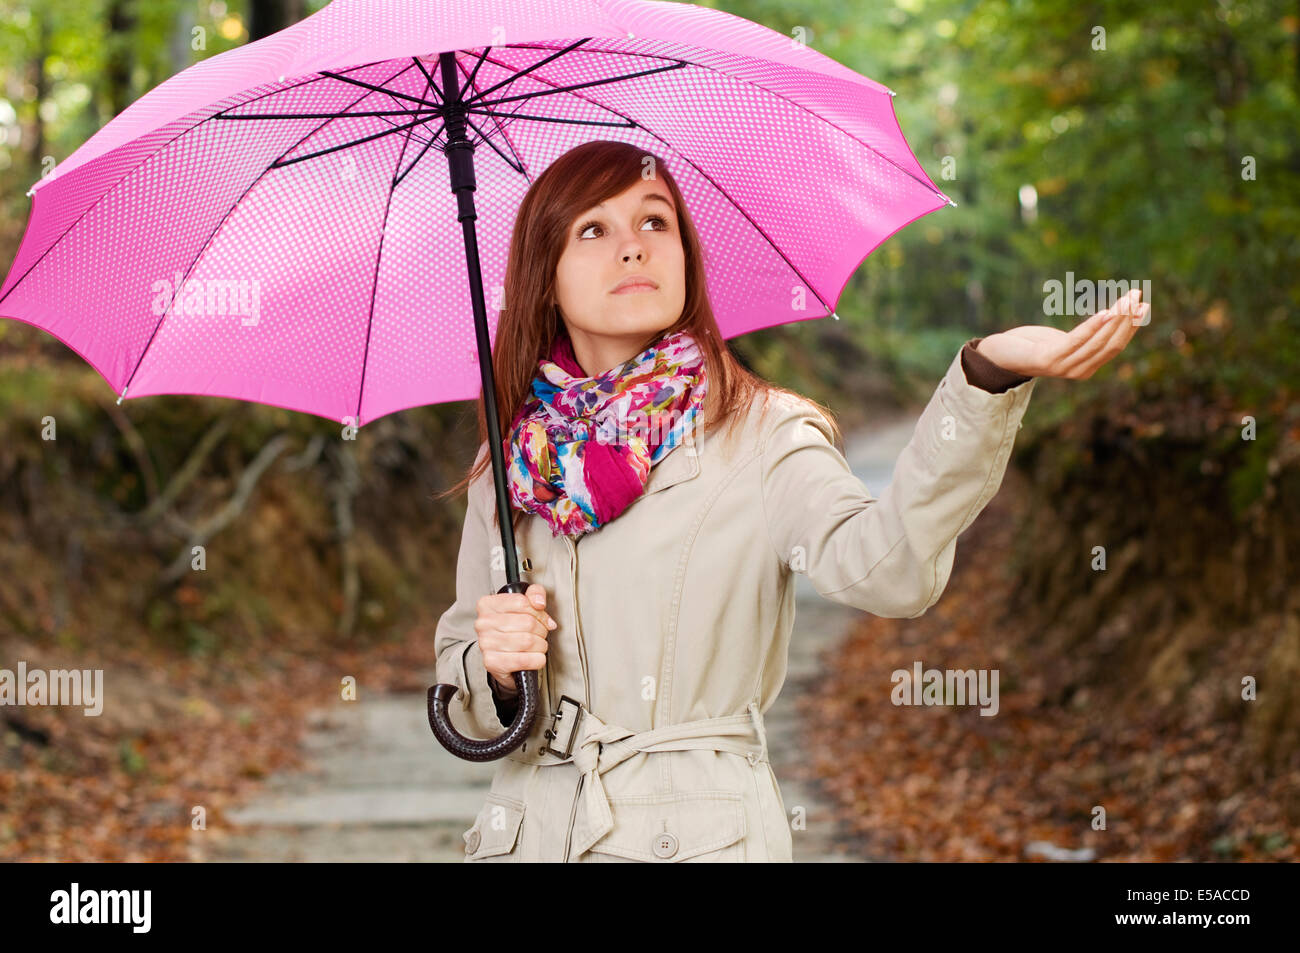 Beautiful girl with umbrella checking for rain, Debica, Poland. Stock Photo